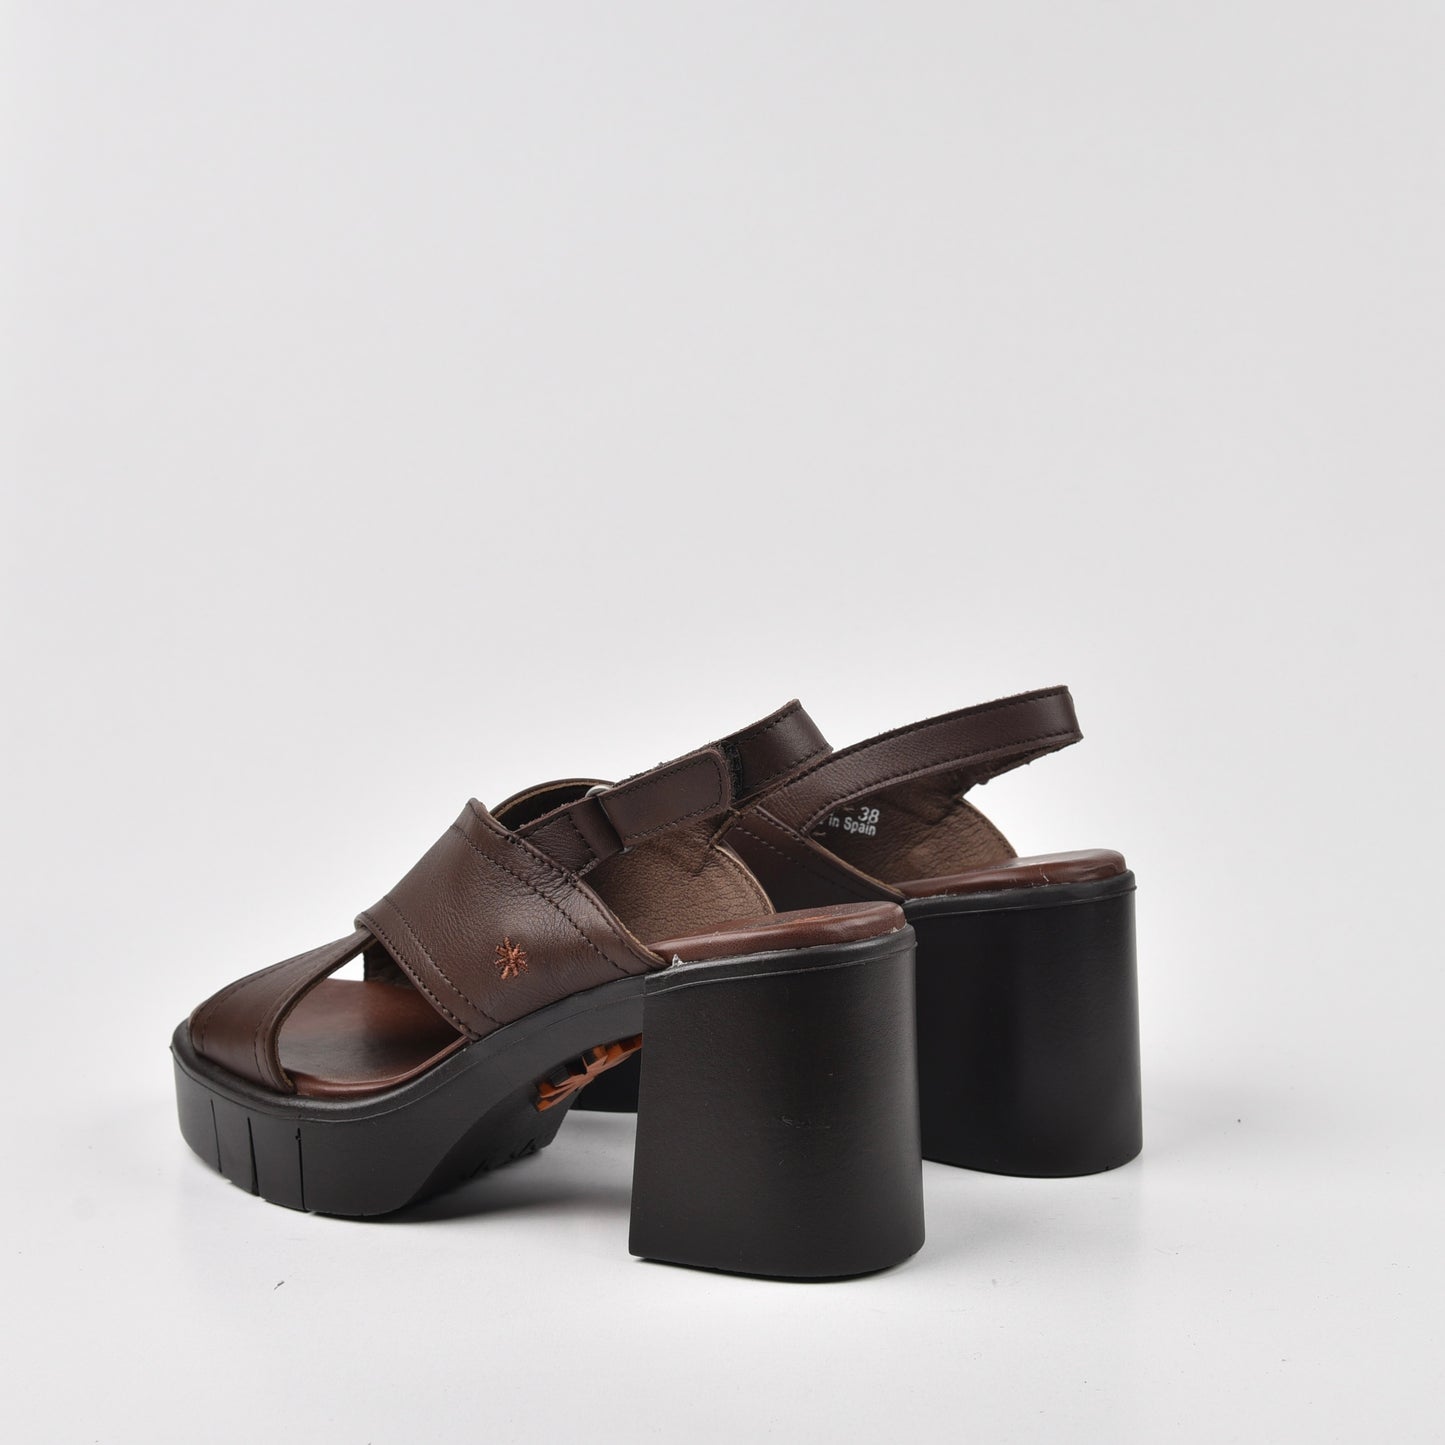 Art Spanish Medium-Heel Sandal for Women in Nappa Brown.